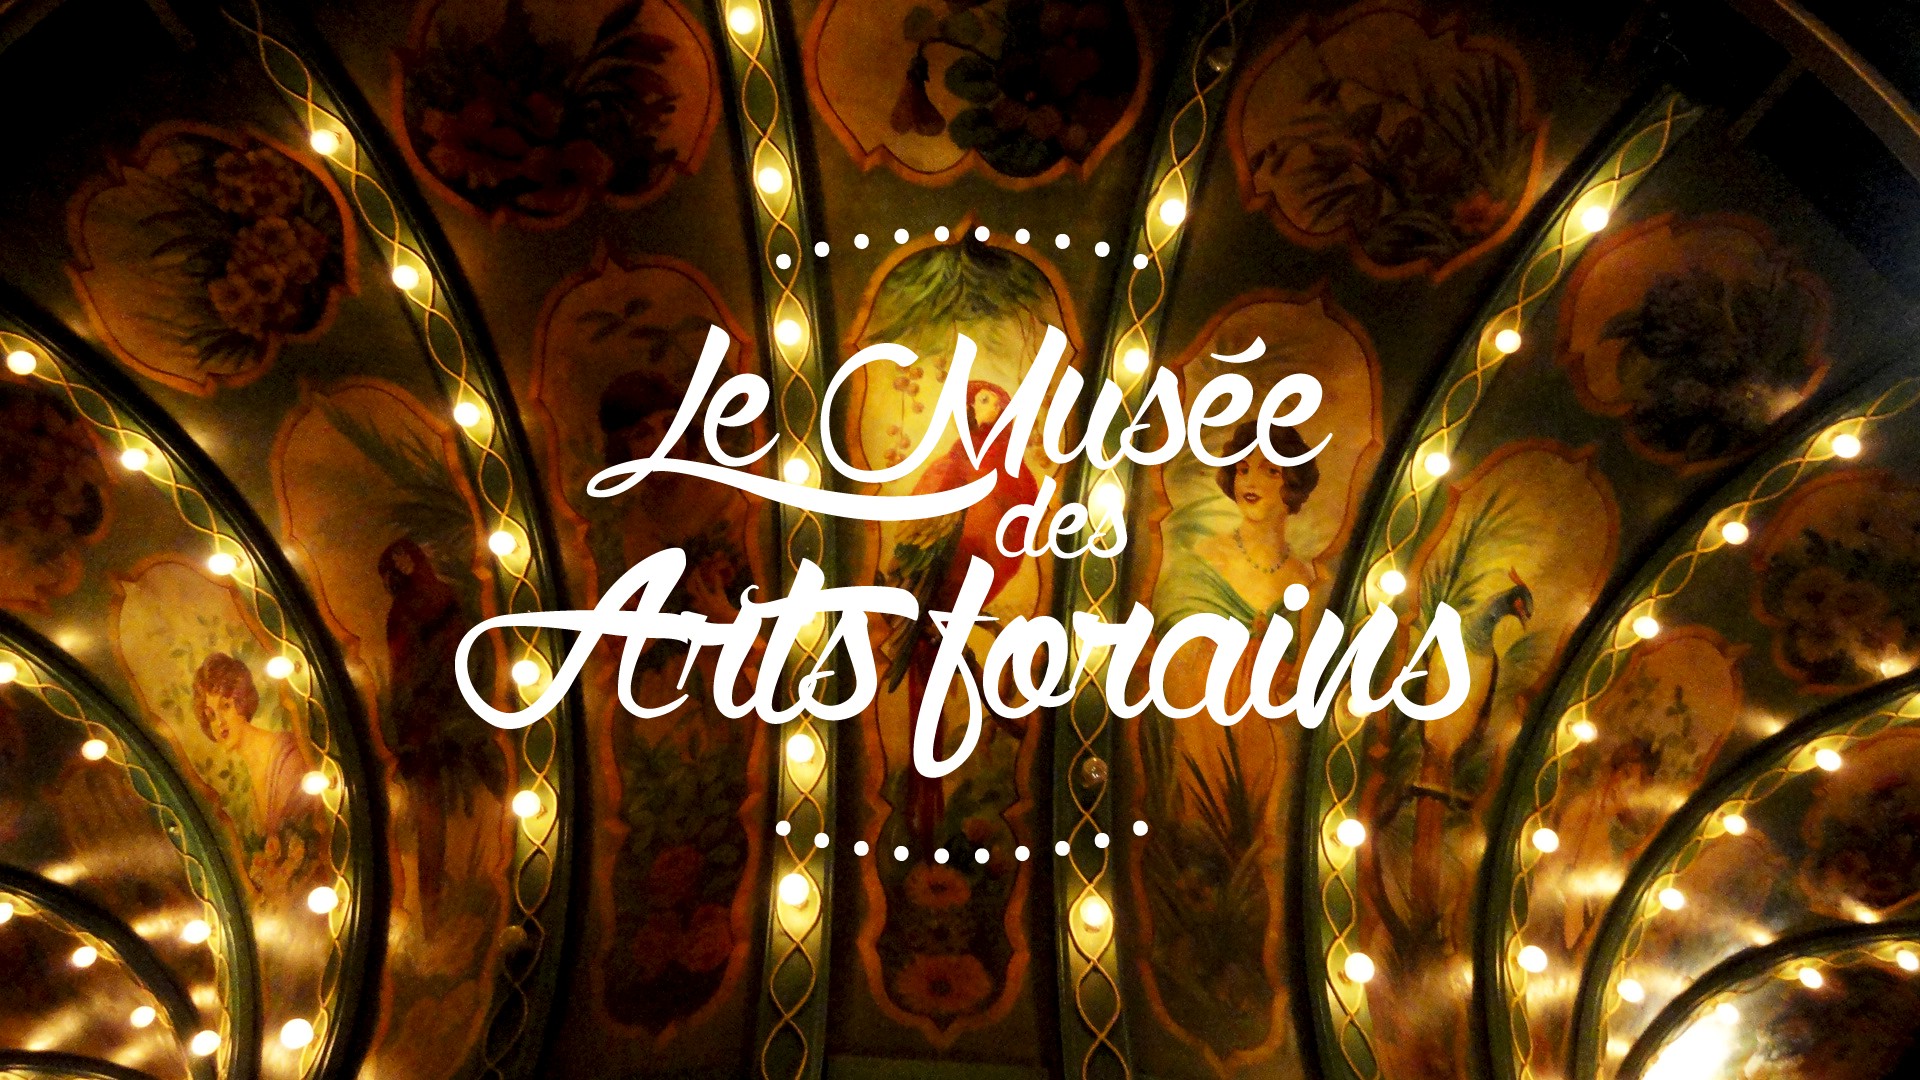 20150110_musee_arts_forains_paris (Large)